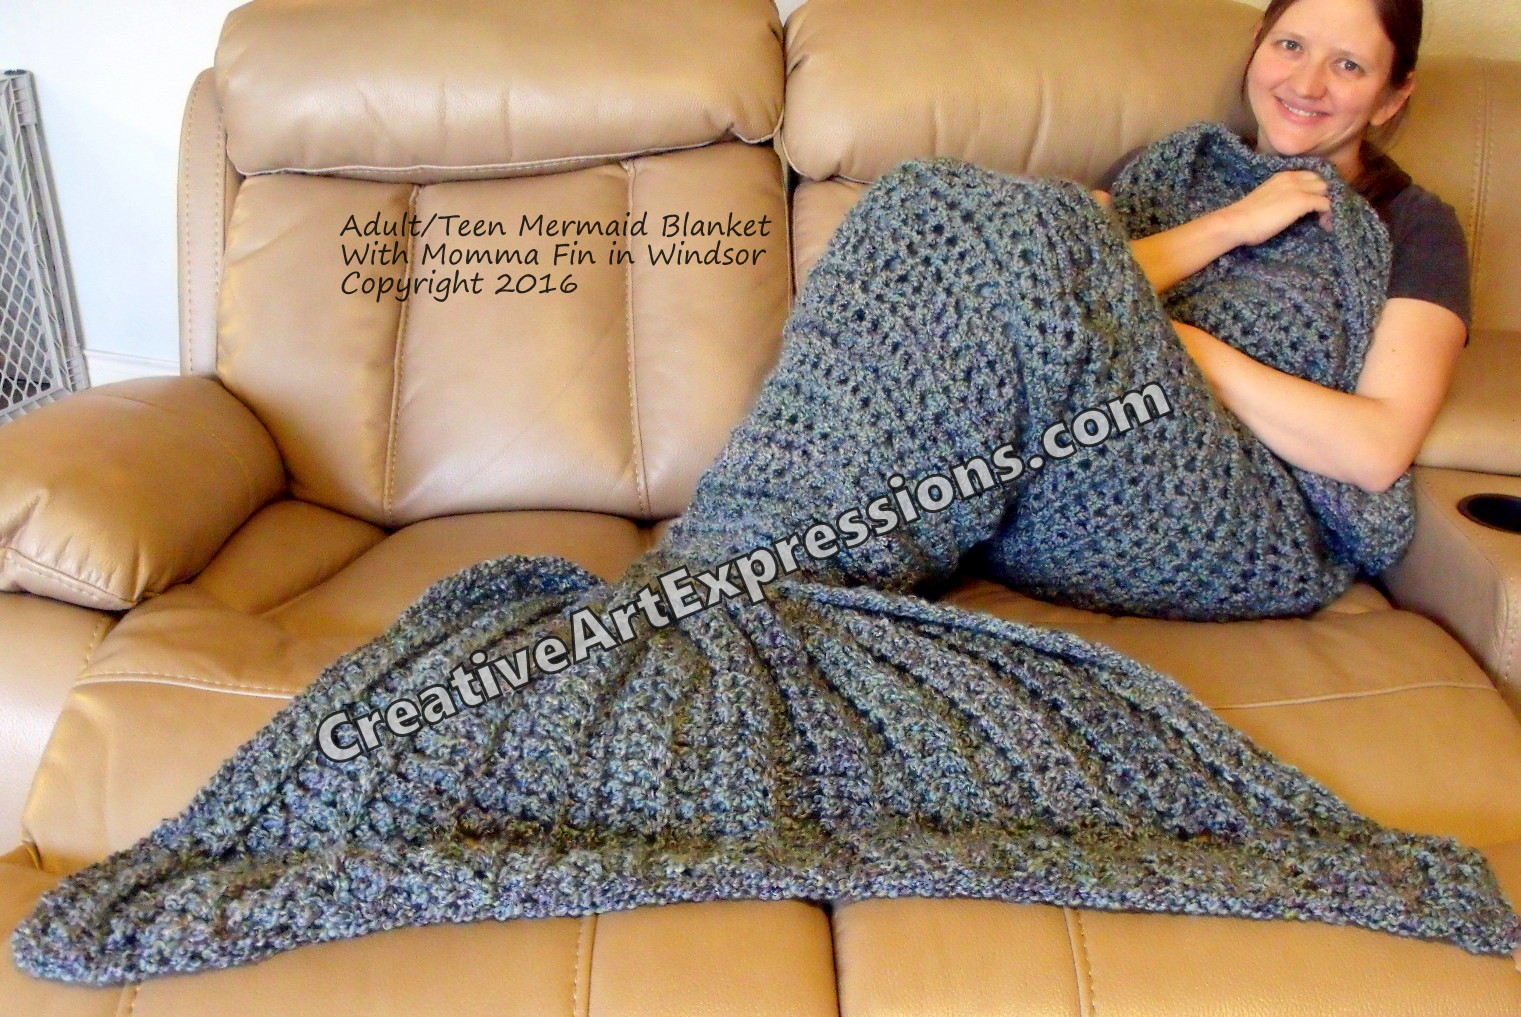 Mermaid Blanket Adult/Teen Momma Fin in Windsor